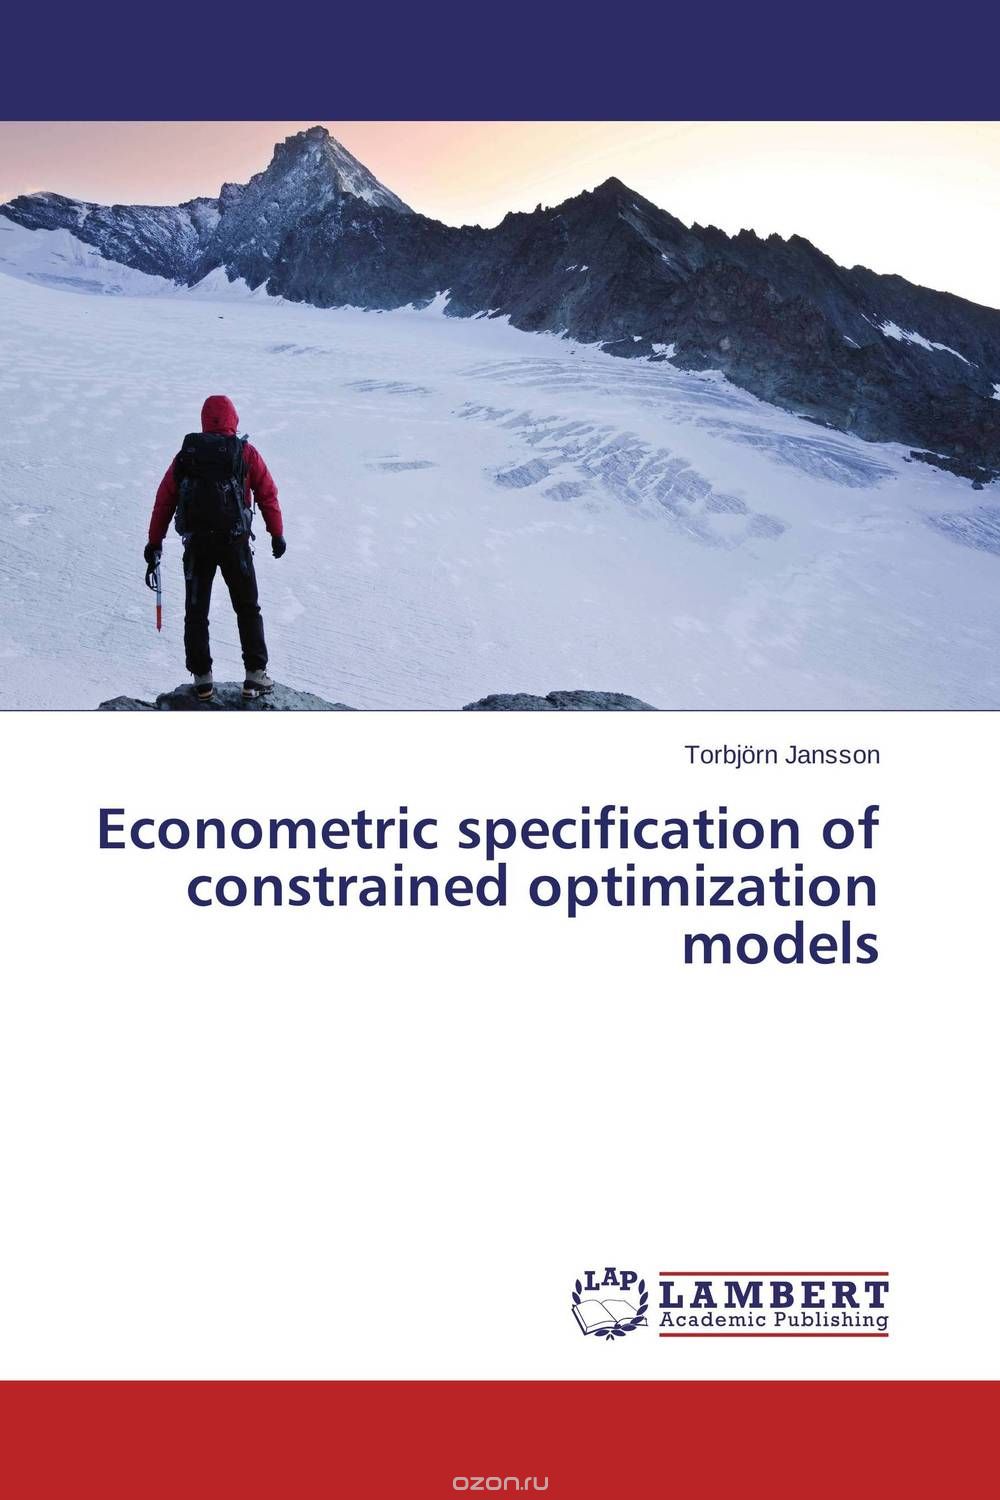 Скачать книгу "Econometric specification of constrained optimization models"